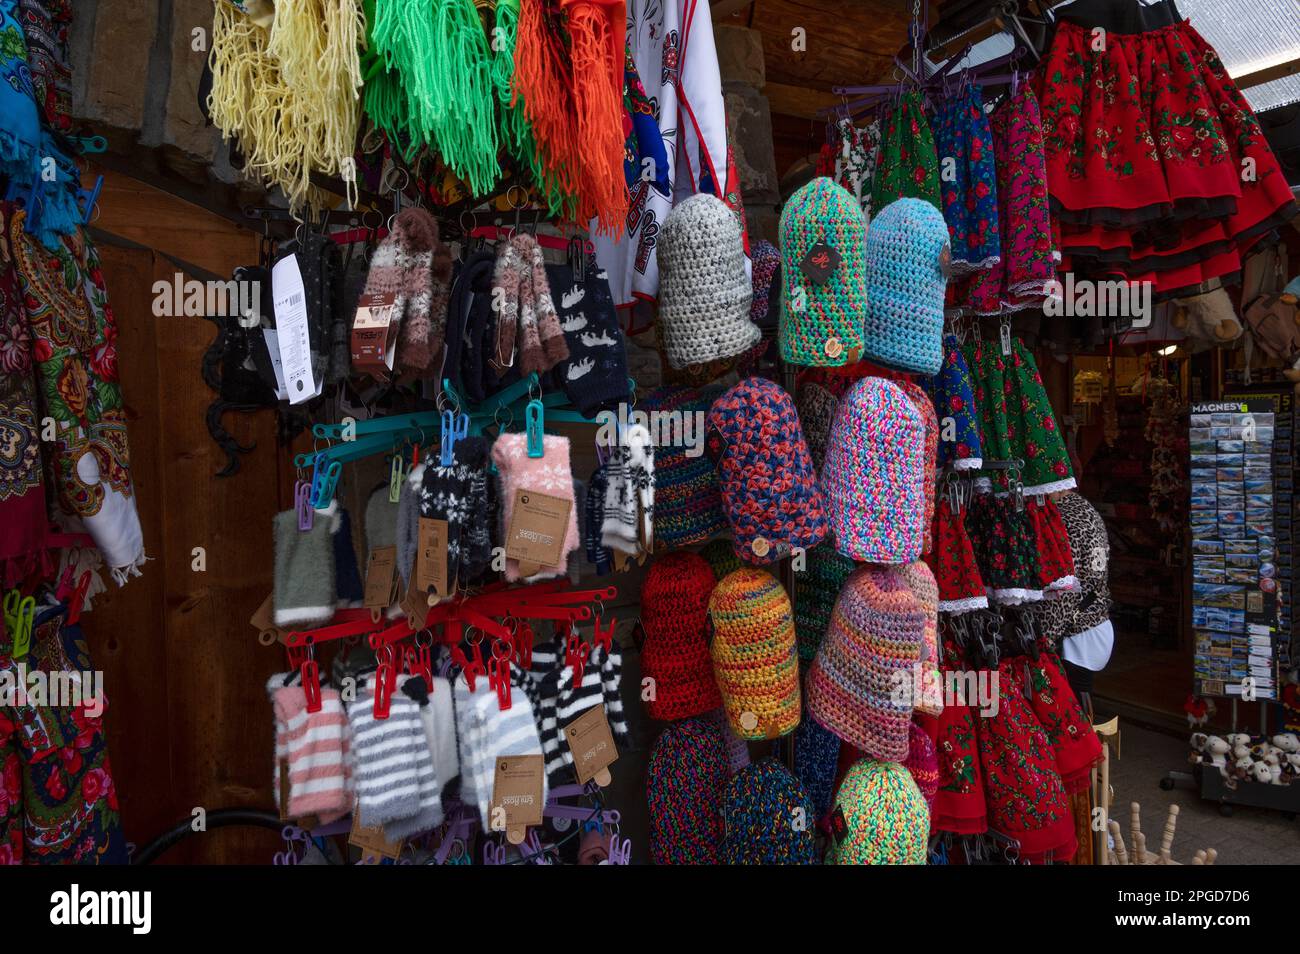 Zakopane, Poland. View of Souvenir shop on the street selling winter woolen clothes and collectibles captured at Zakopane, Poland. Stock Photo